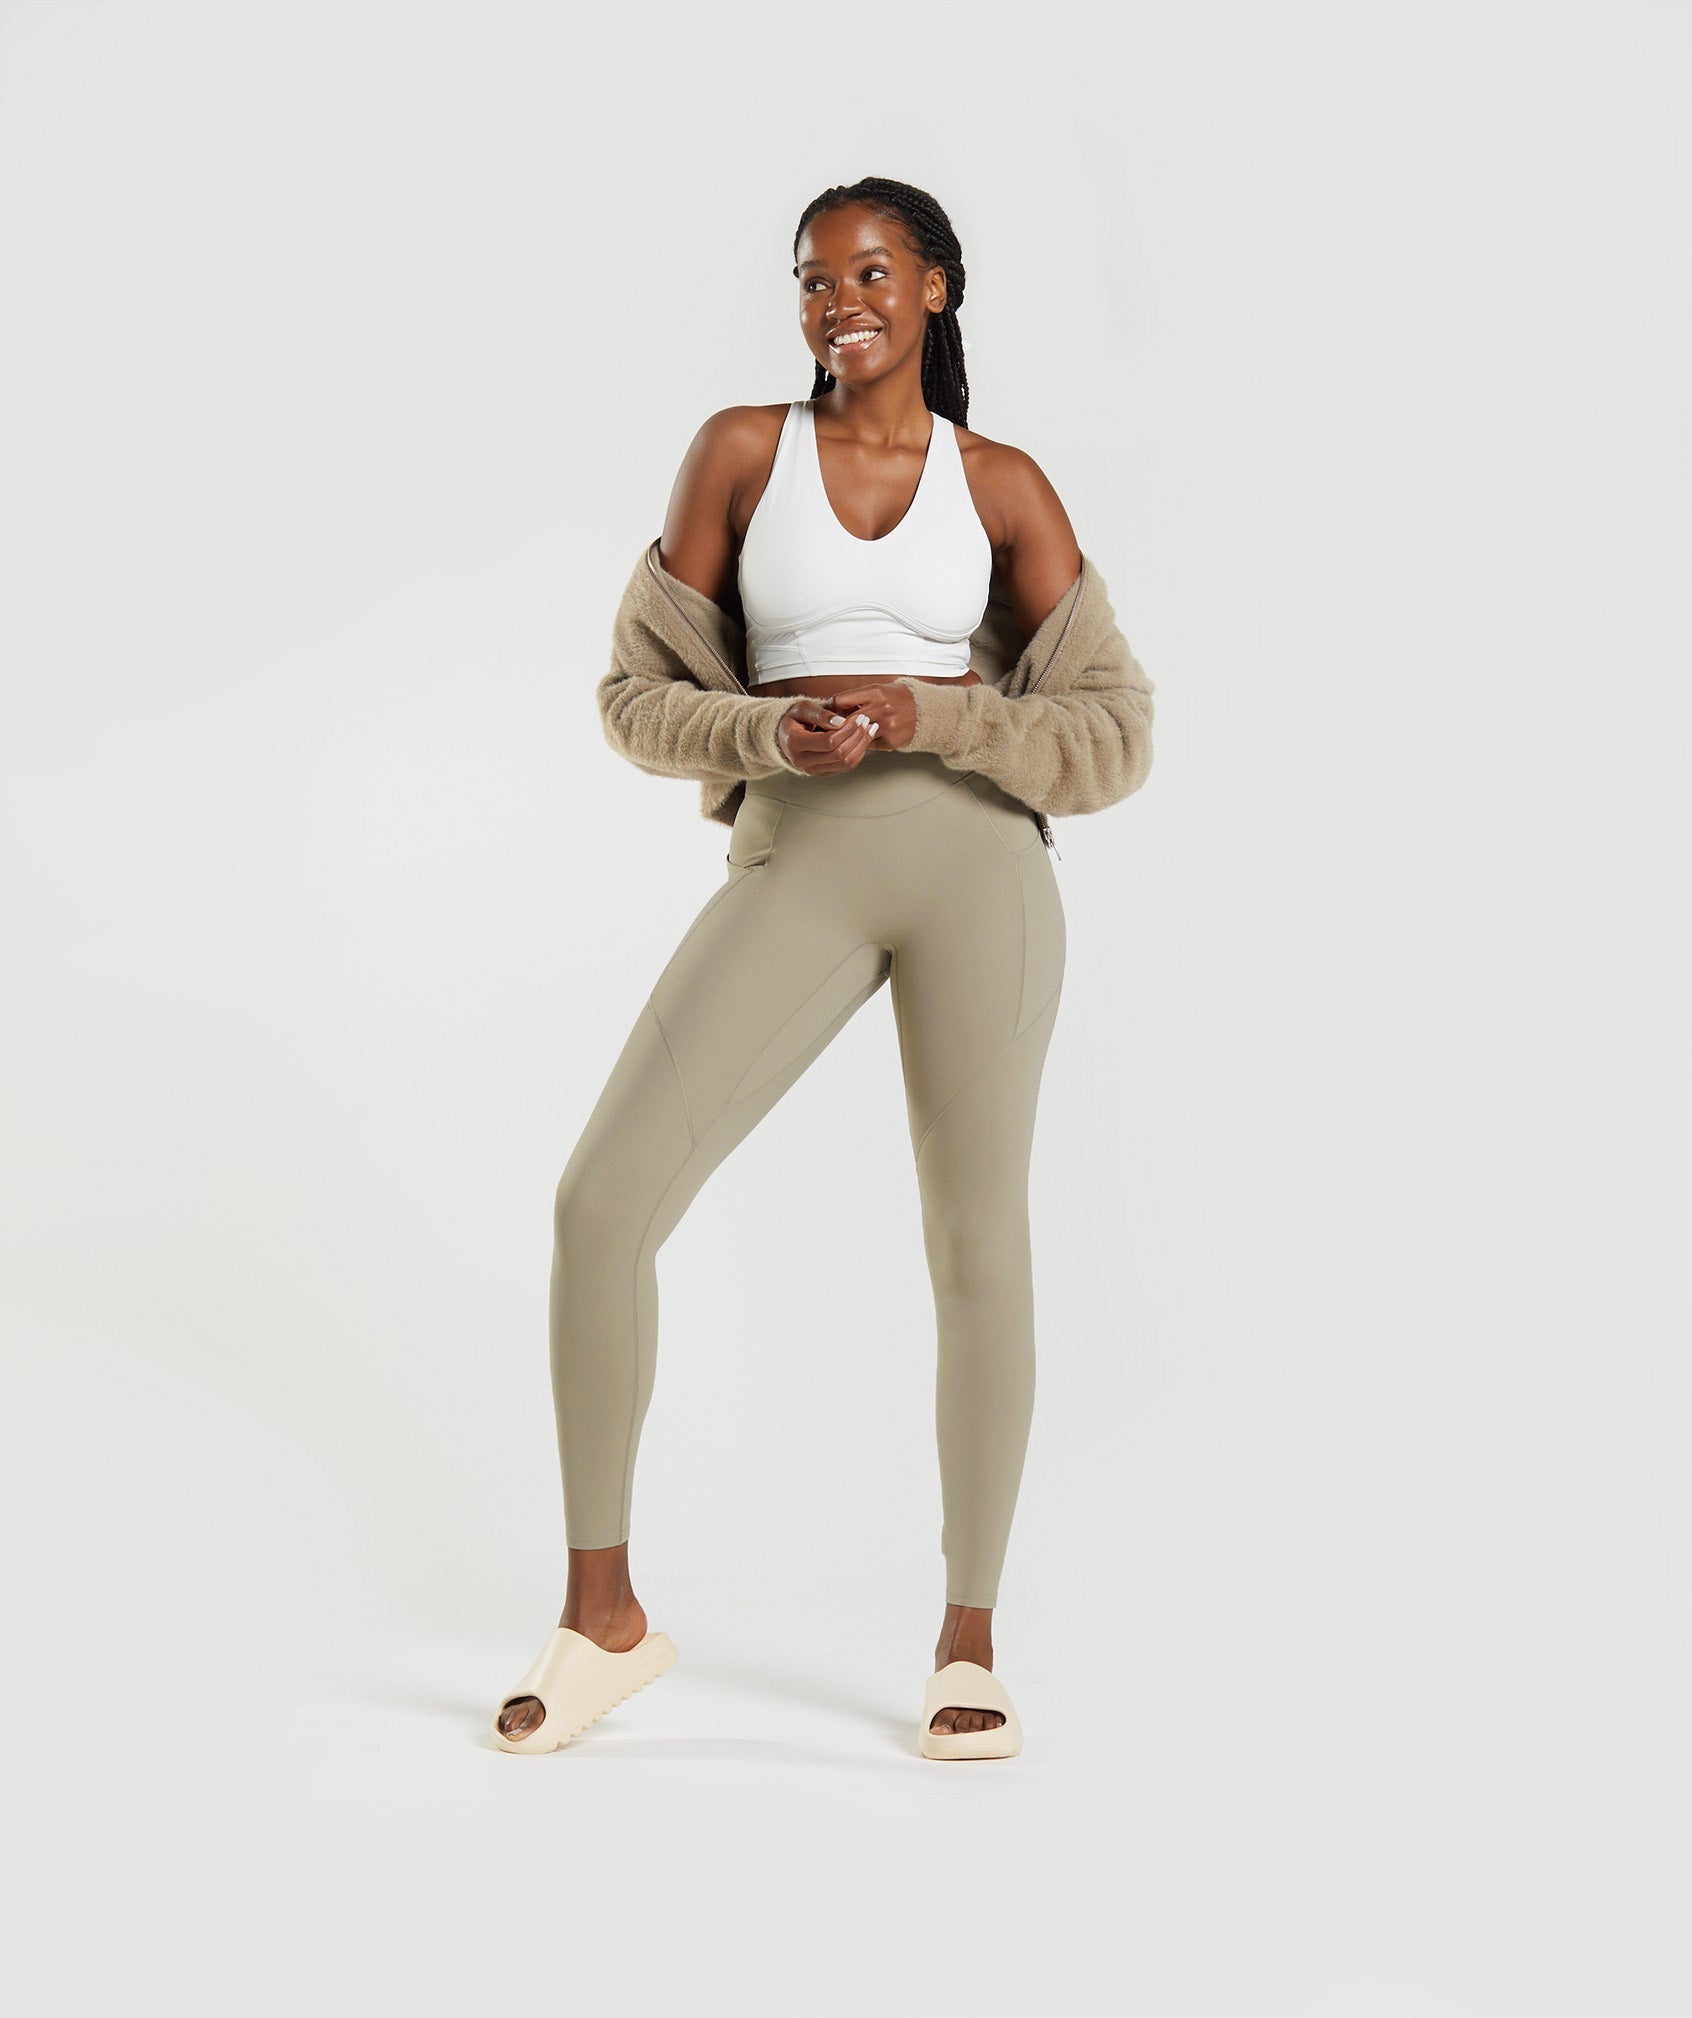 Gymshark Whitney Simmons Womens Chocolate Leggings Nylon - Size